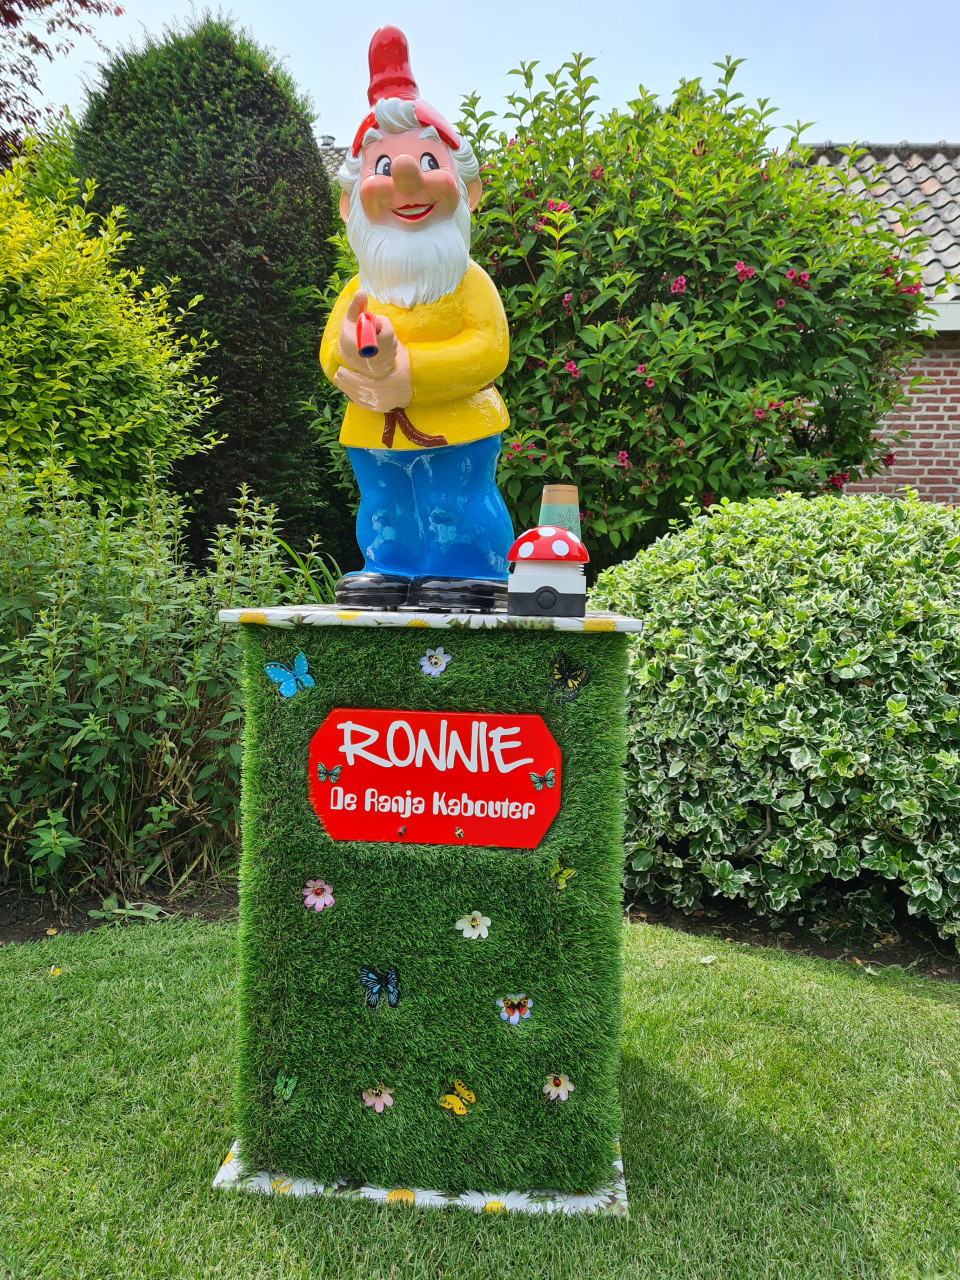 Ranja automaat Ronnie de Ranja kabouter: www.jump4joyspringkussenverhuur.nl